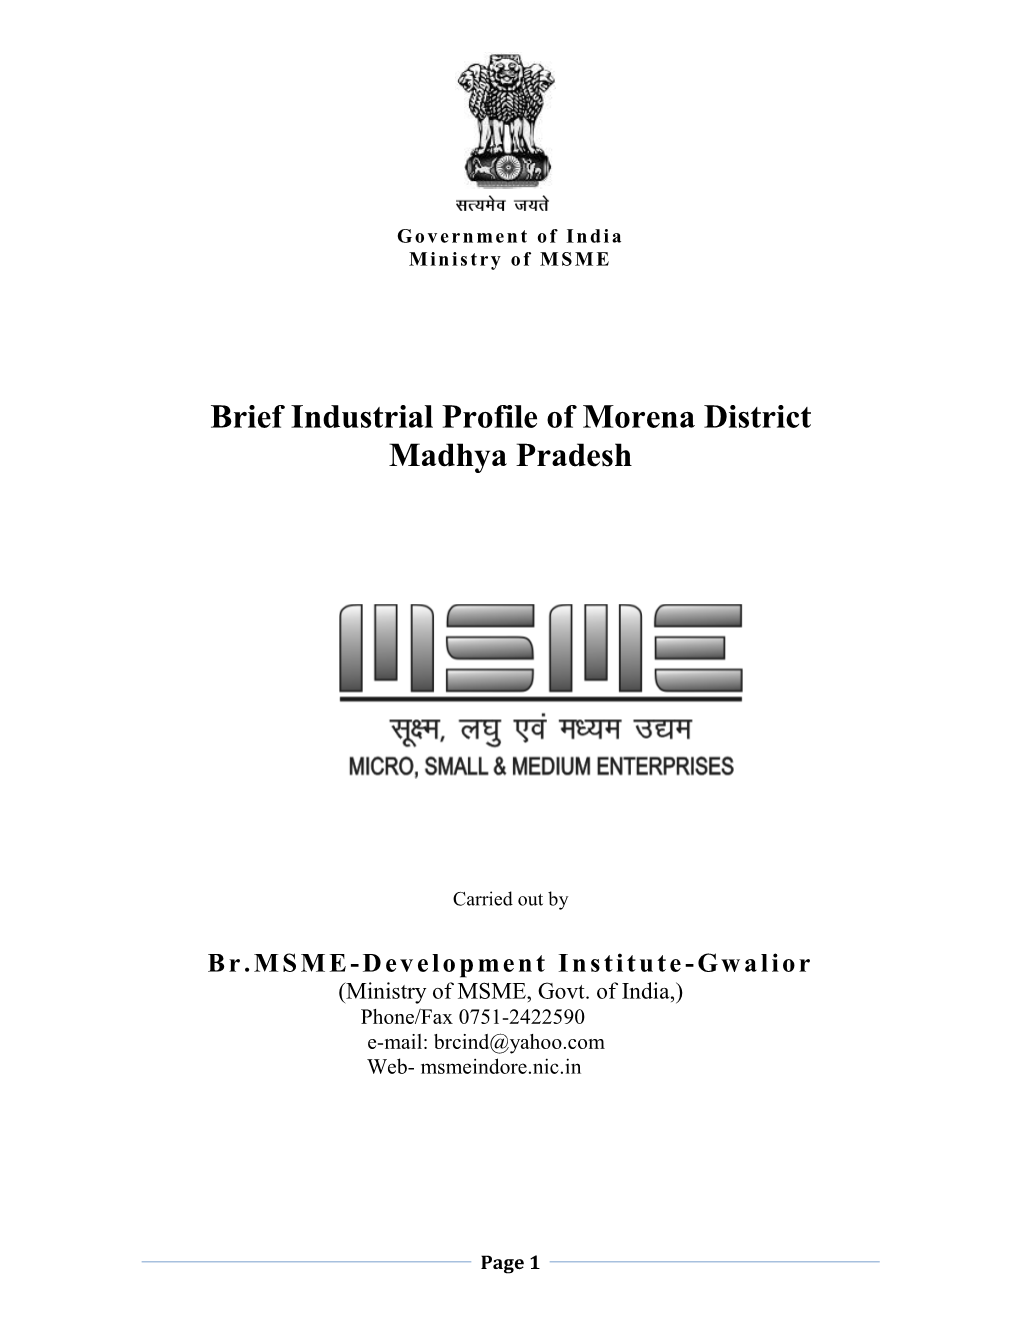 Brief Industrial Profile of Morena District Madhya Pradesh